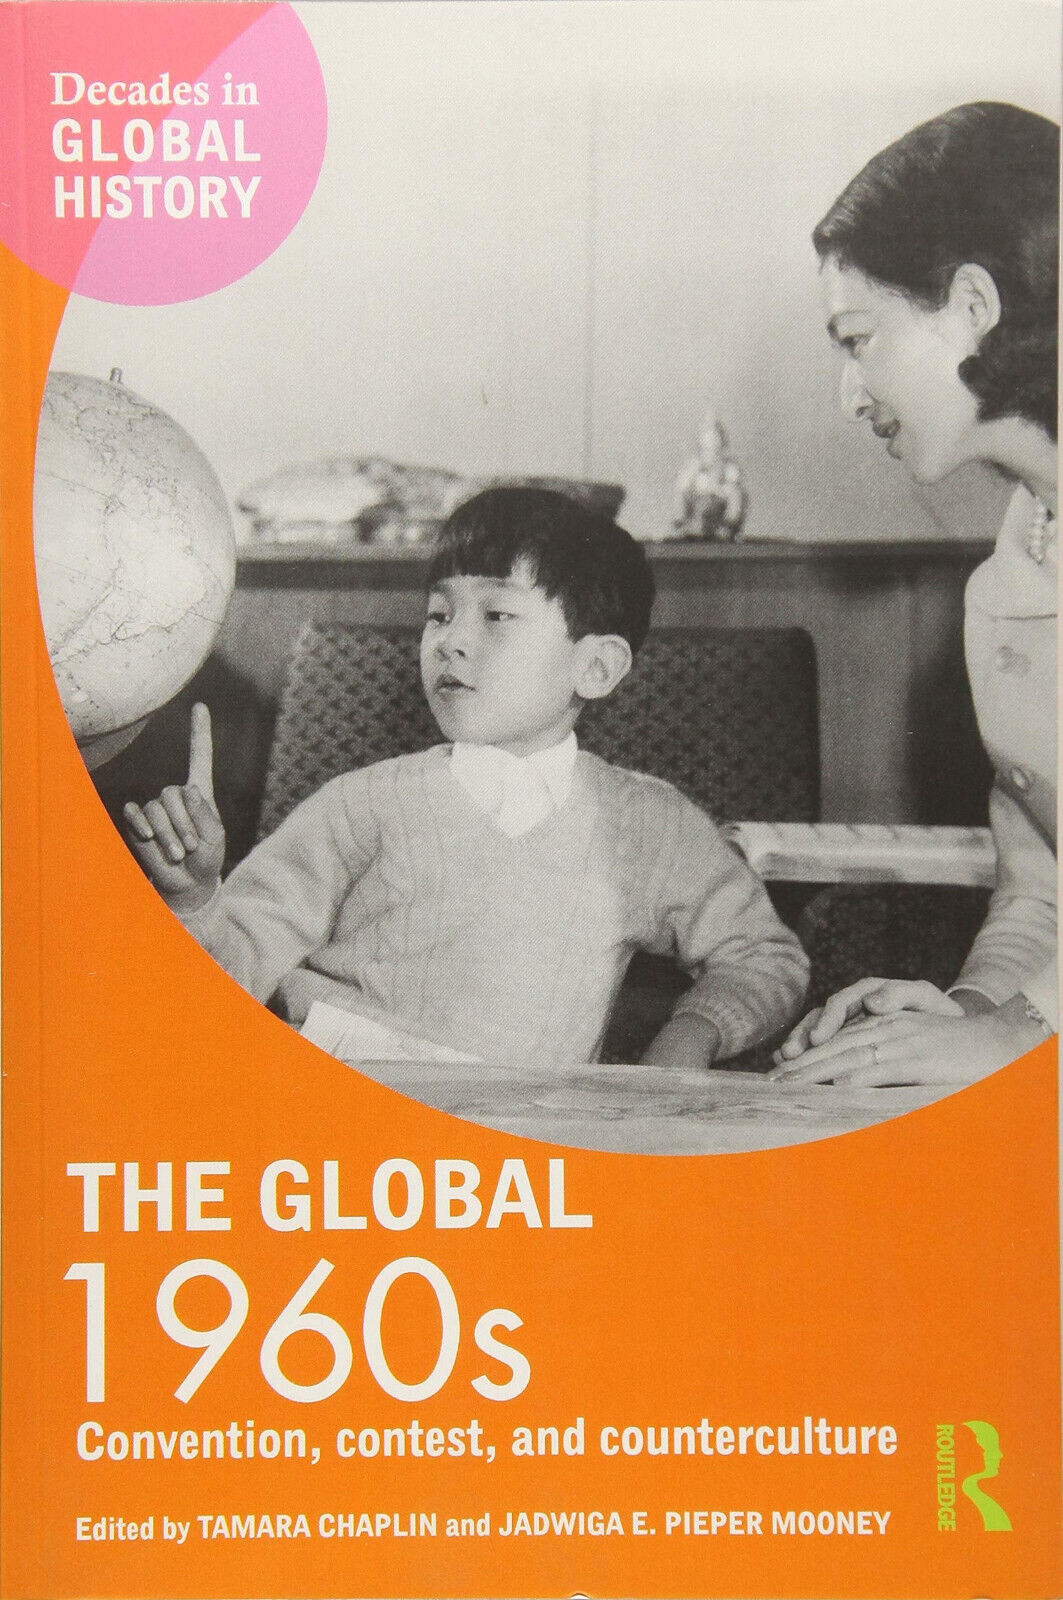 The Global 1960s - Tamara Chaplin, Jadwiga E. Pieper Mooney - 2017